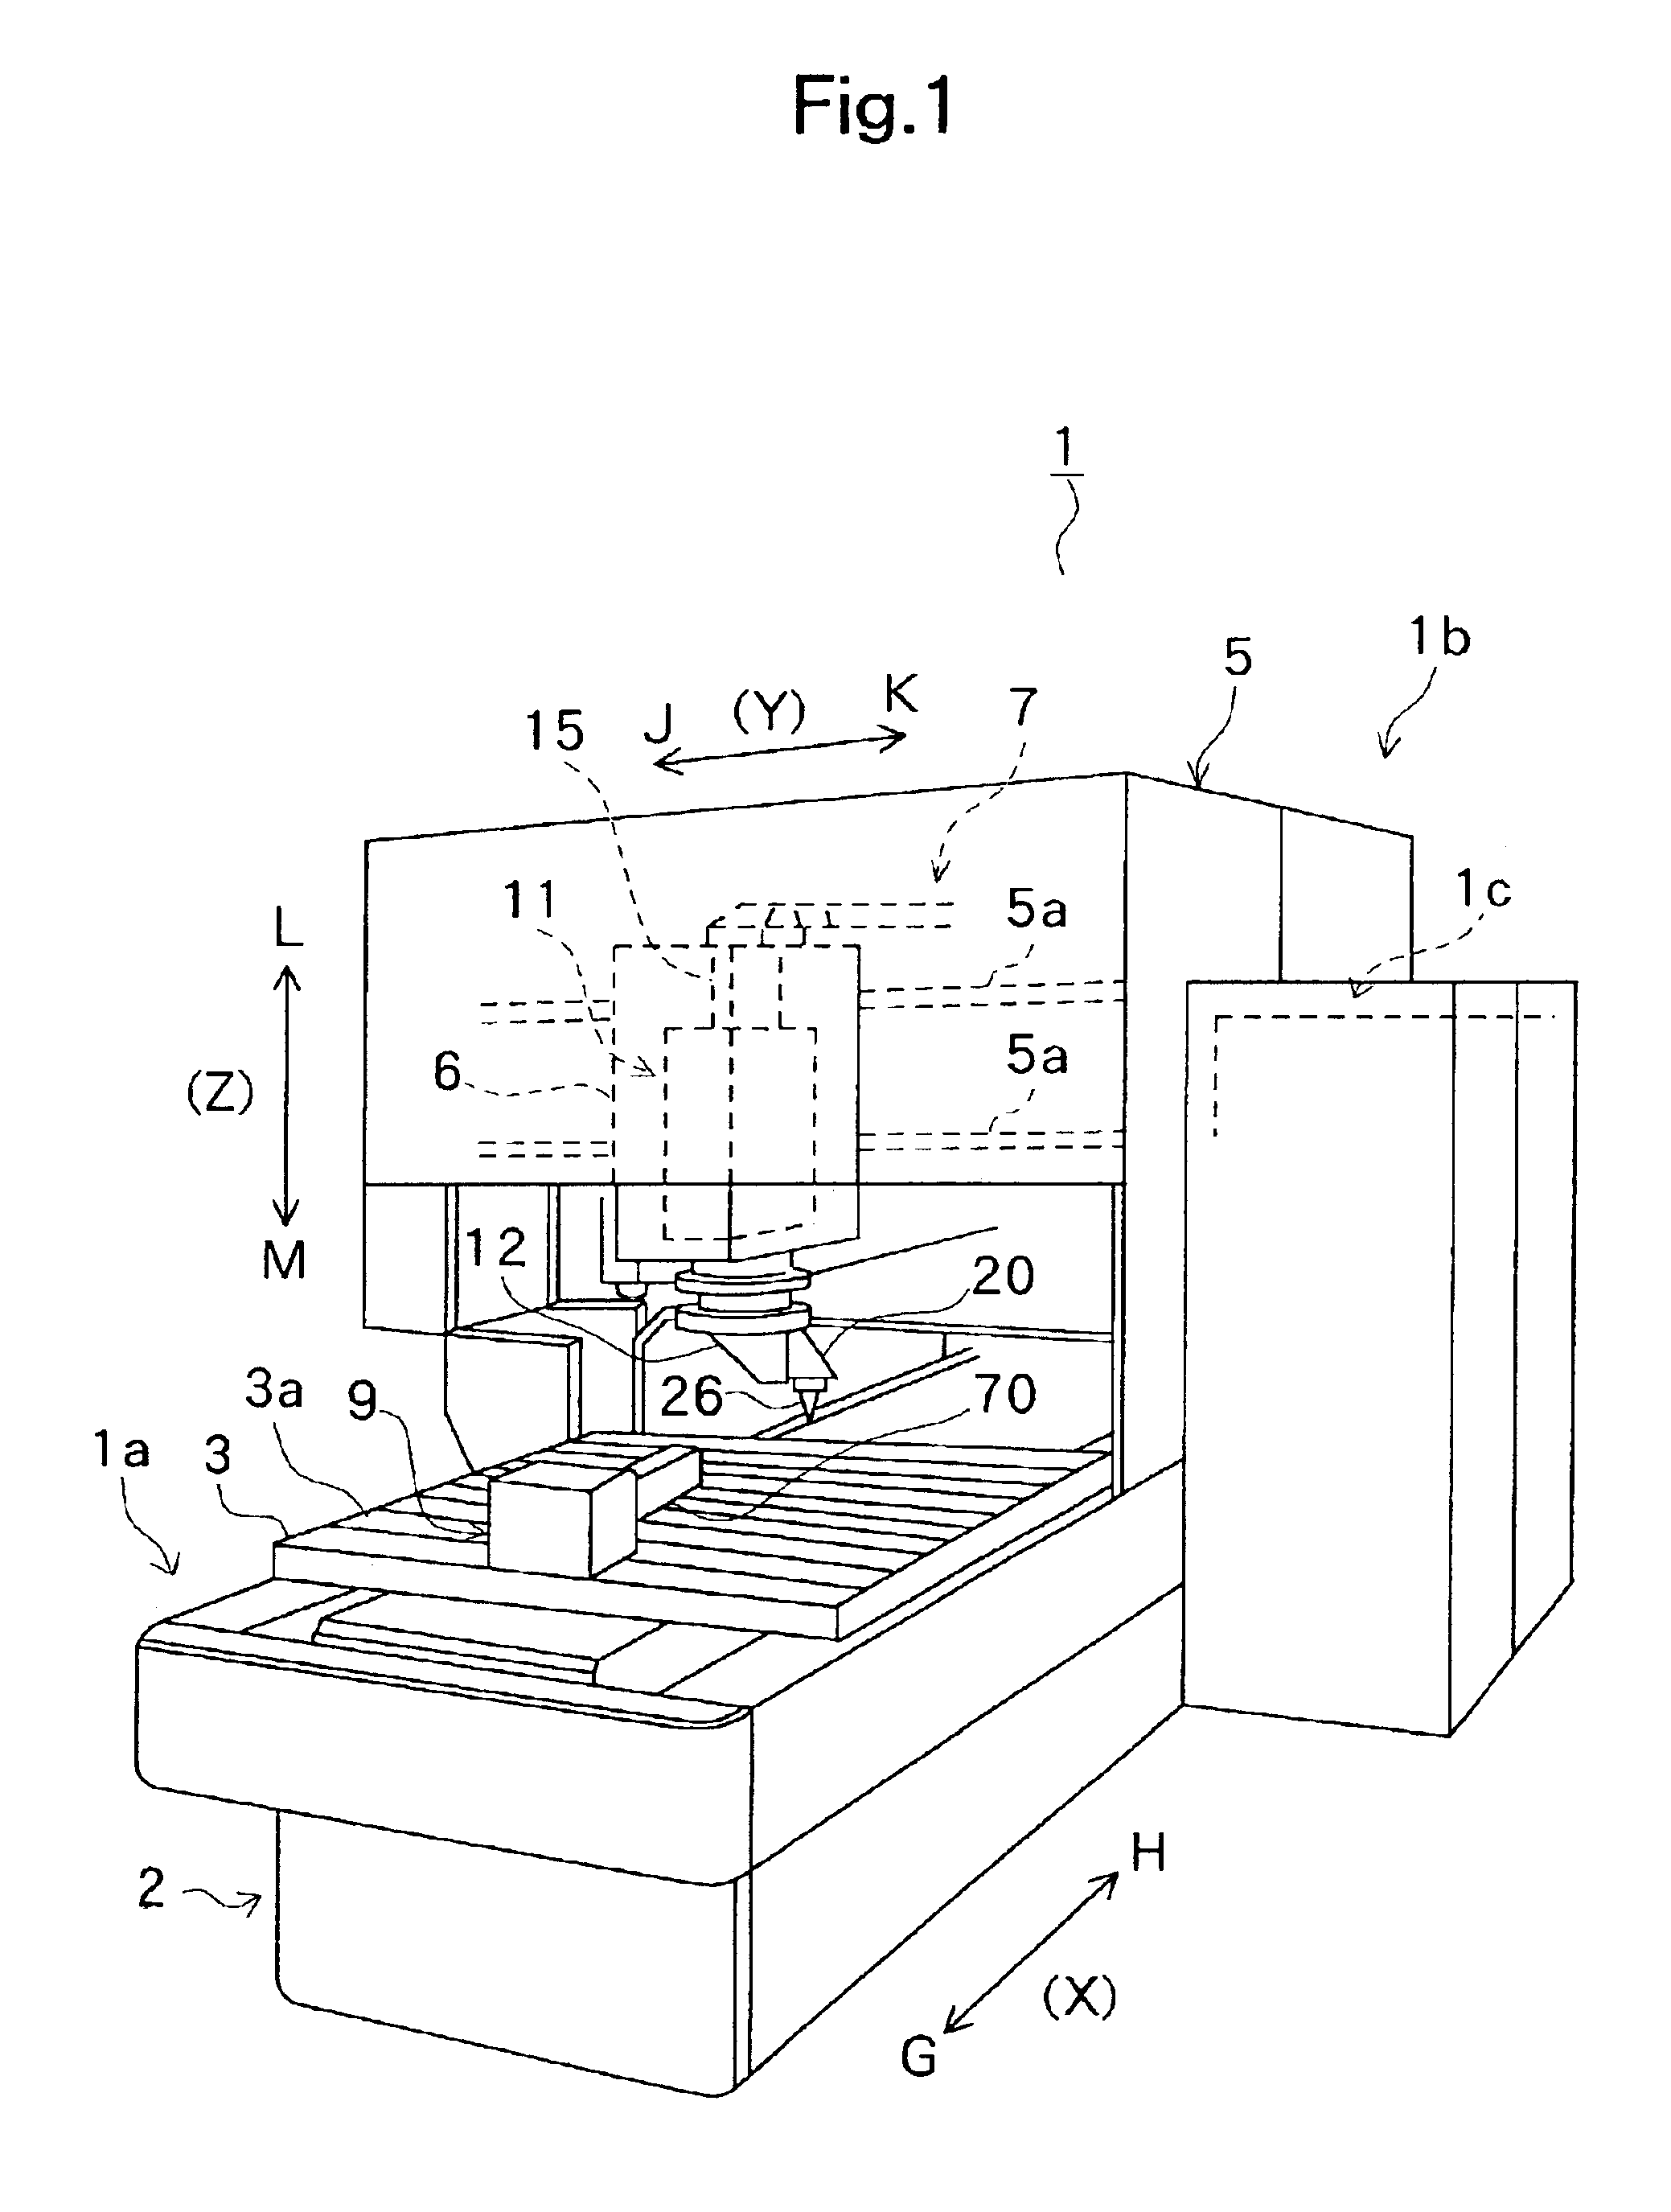 Three dimensional linear machining apparatus